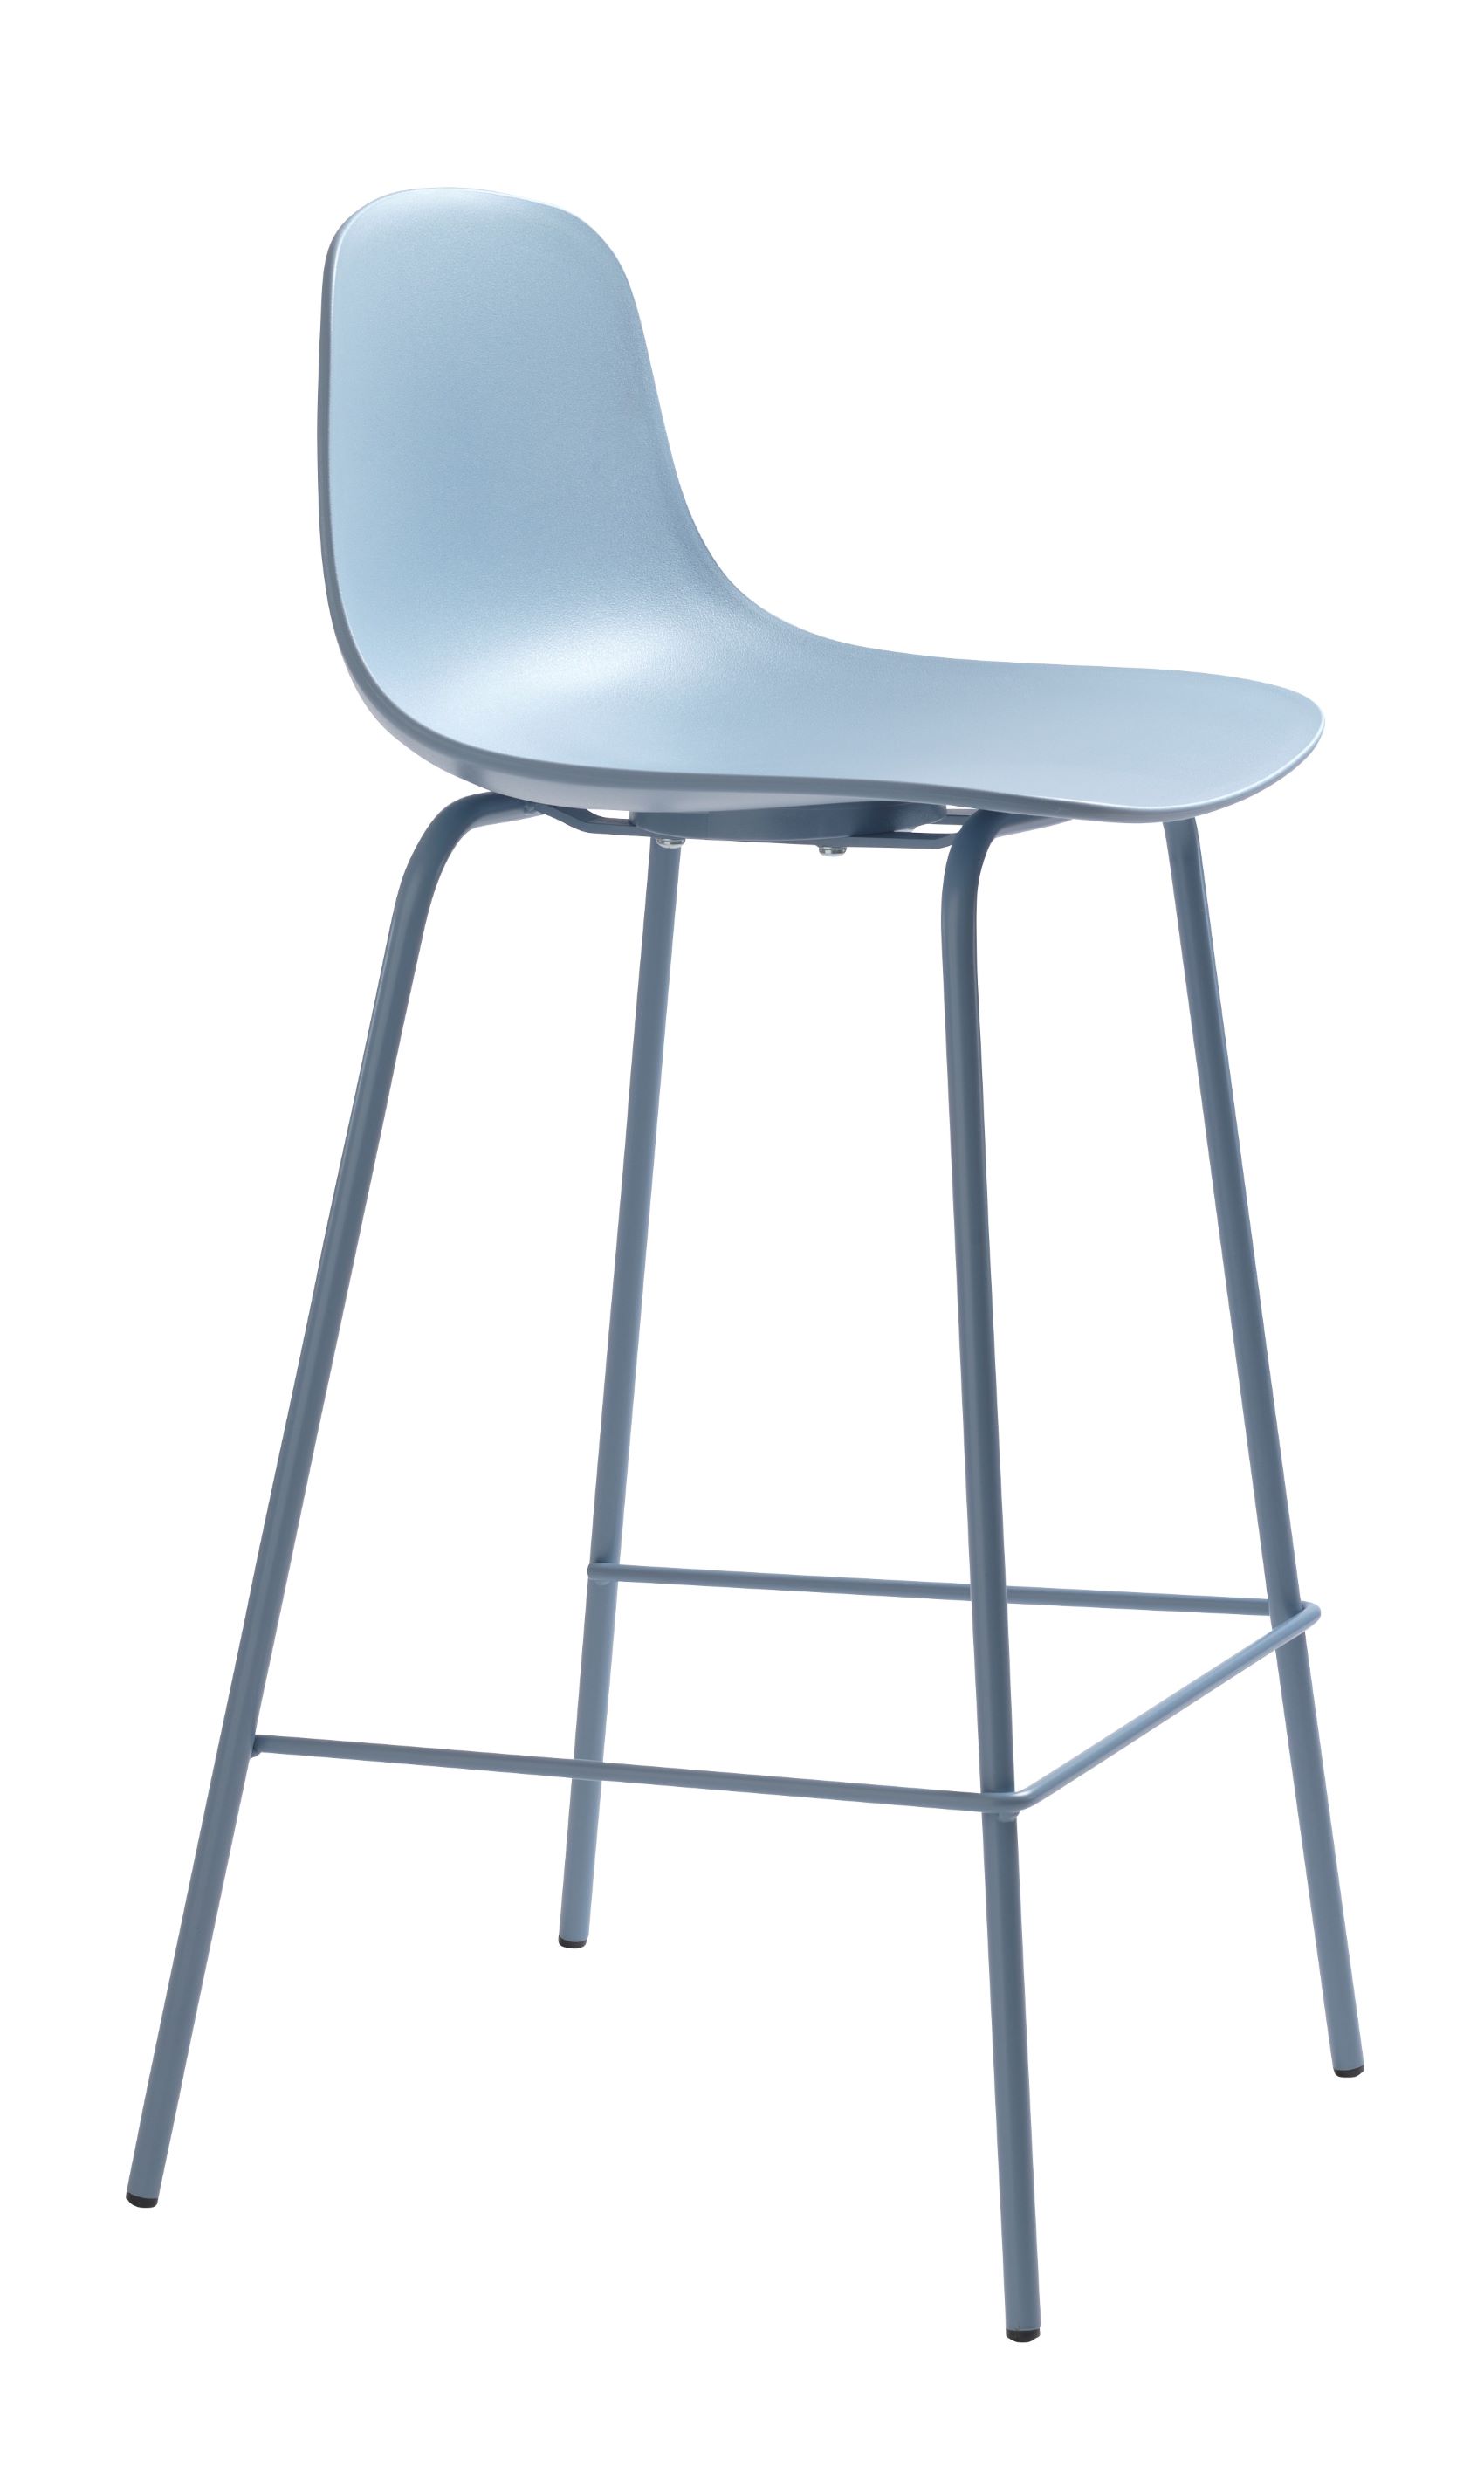 Metall Barhocker Whitby - Kunststoff Sitzschale - skandinavisches Design - staubblau